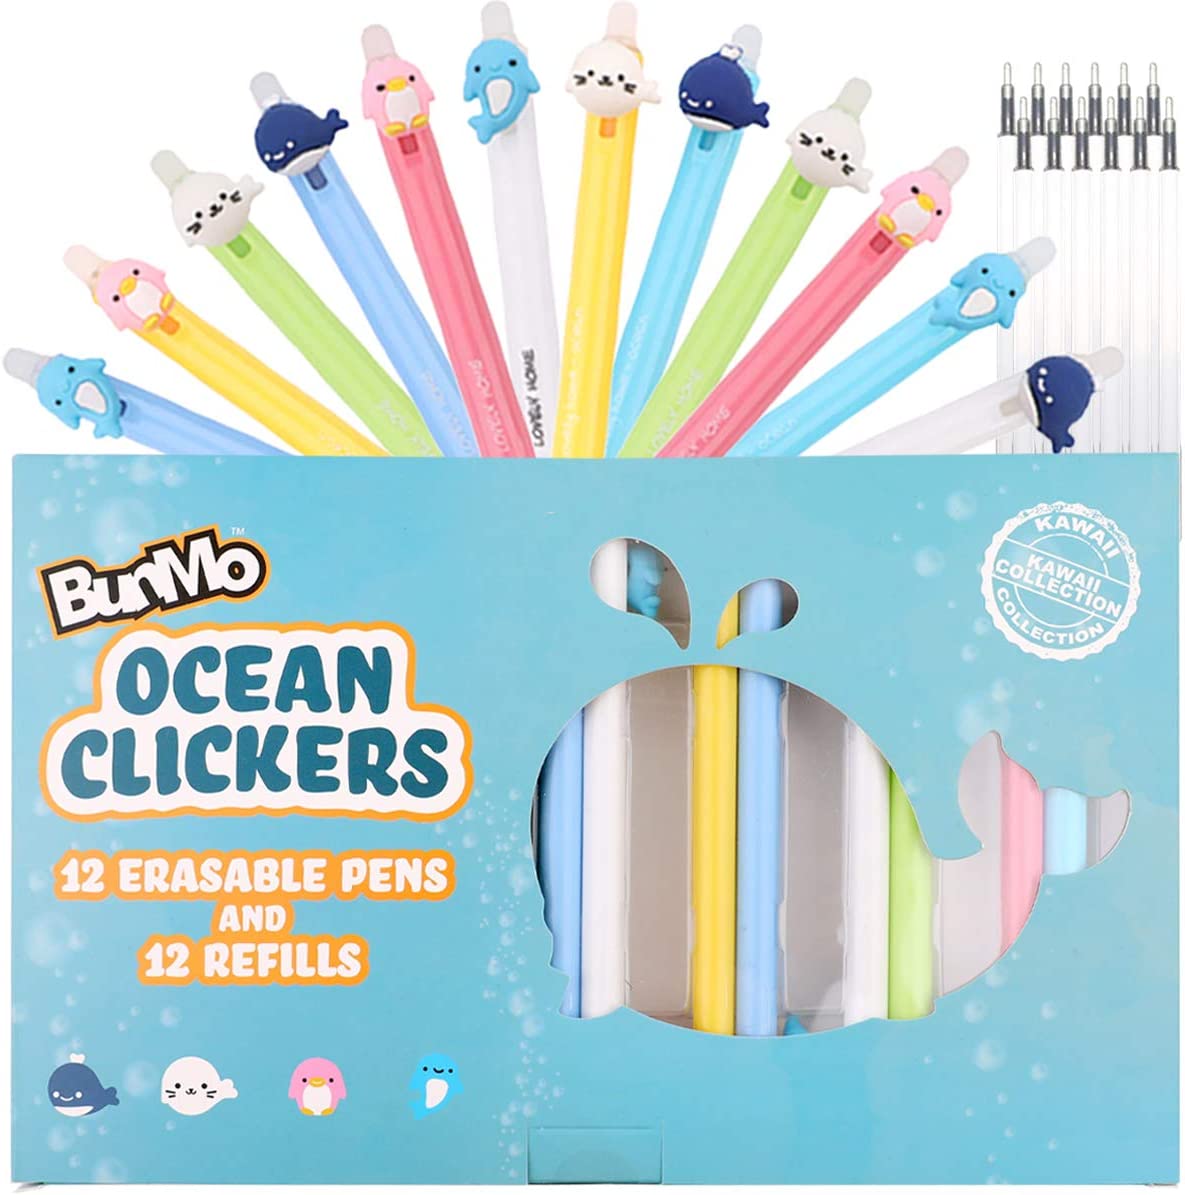 BUNMO Children’s Long-Lasting Erasable Pens, 12-Pack